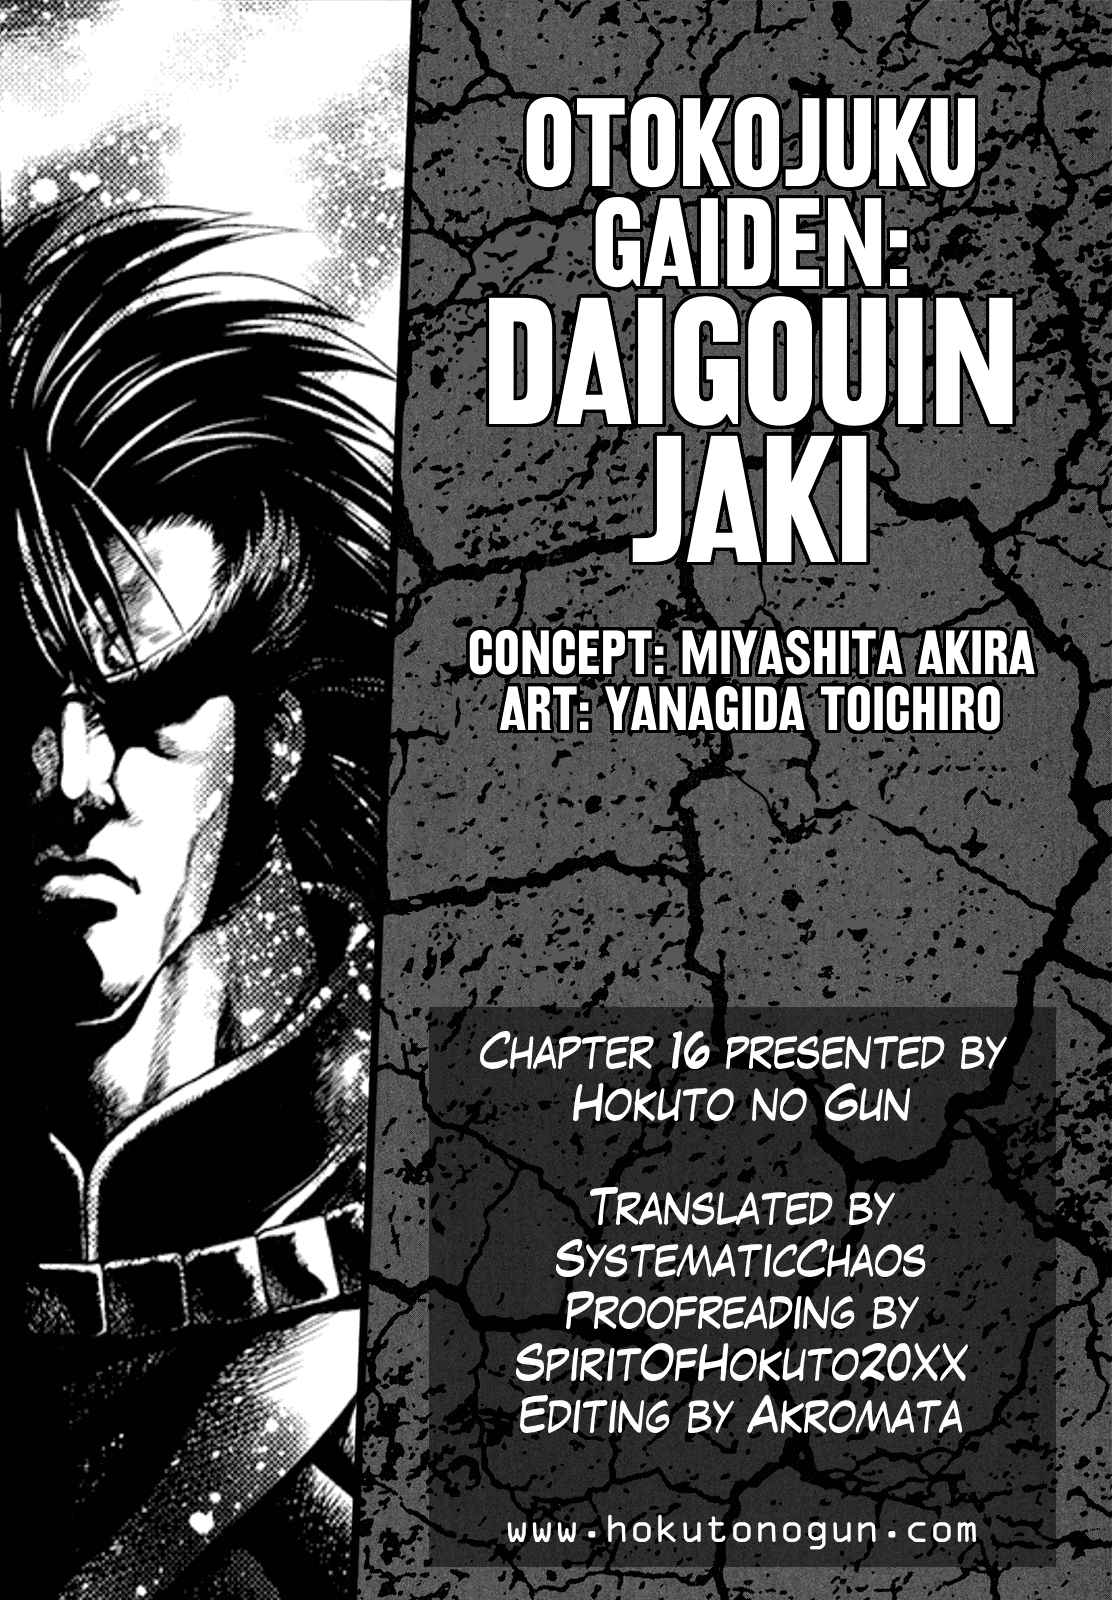 Otokojuku Gaiden Daigouin Jaki Vol. 3 Ch. 16 Prison of Hell